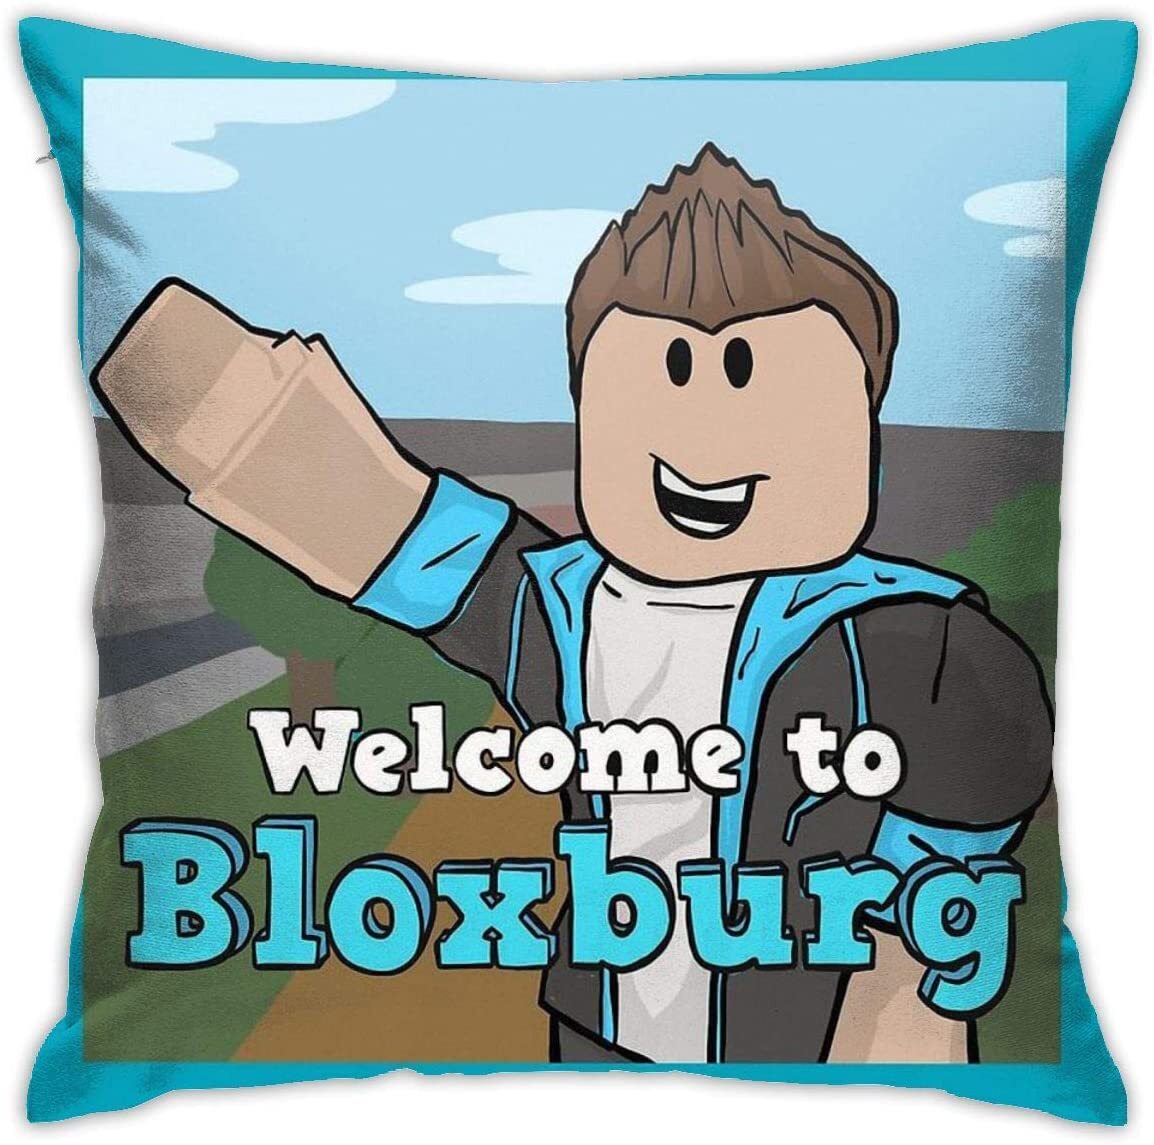 Bloxburg poster